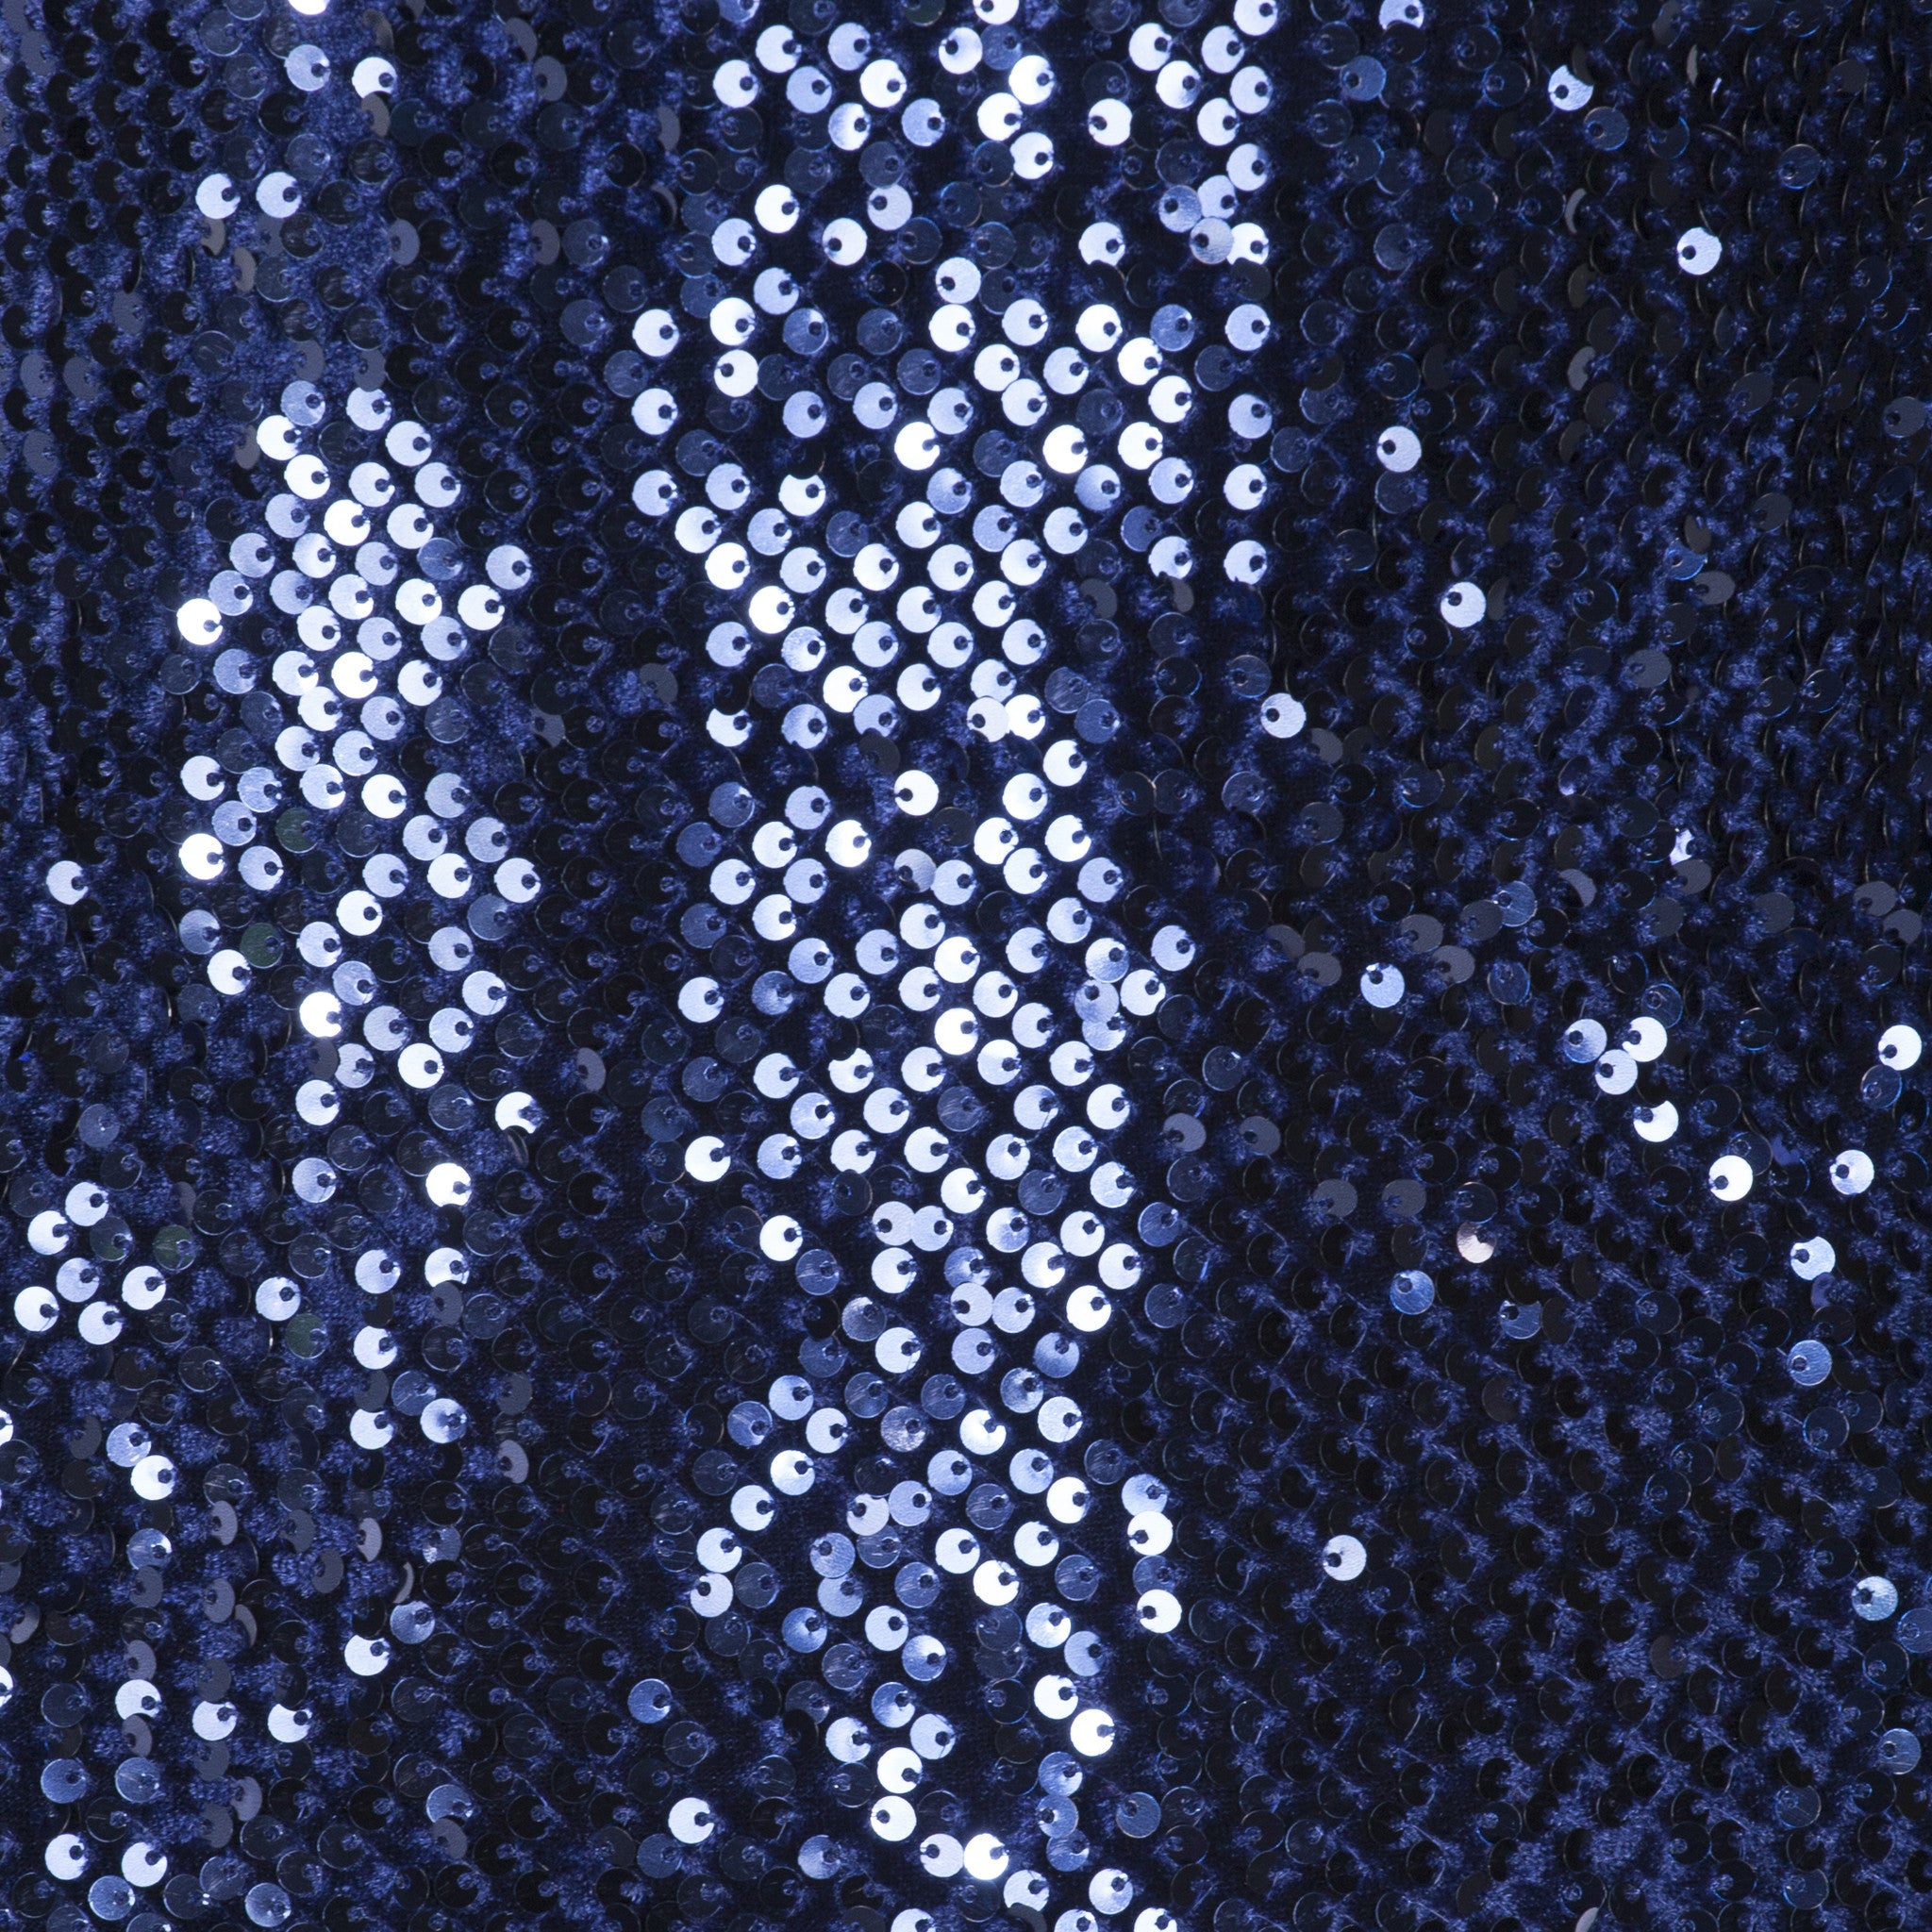 Navy Blue 3/4 Sleeve V Neck Velour Sequin Pencil Wiggle Dress